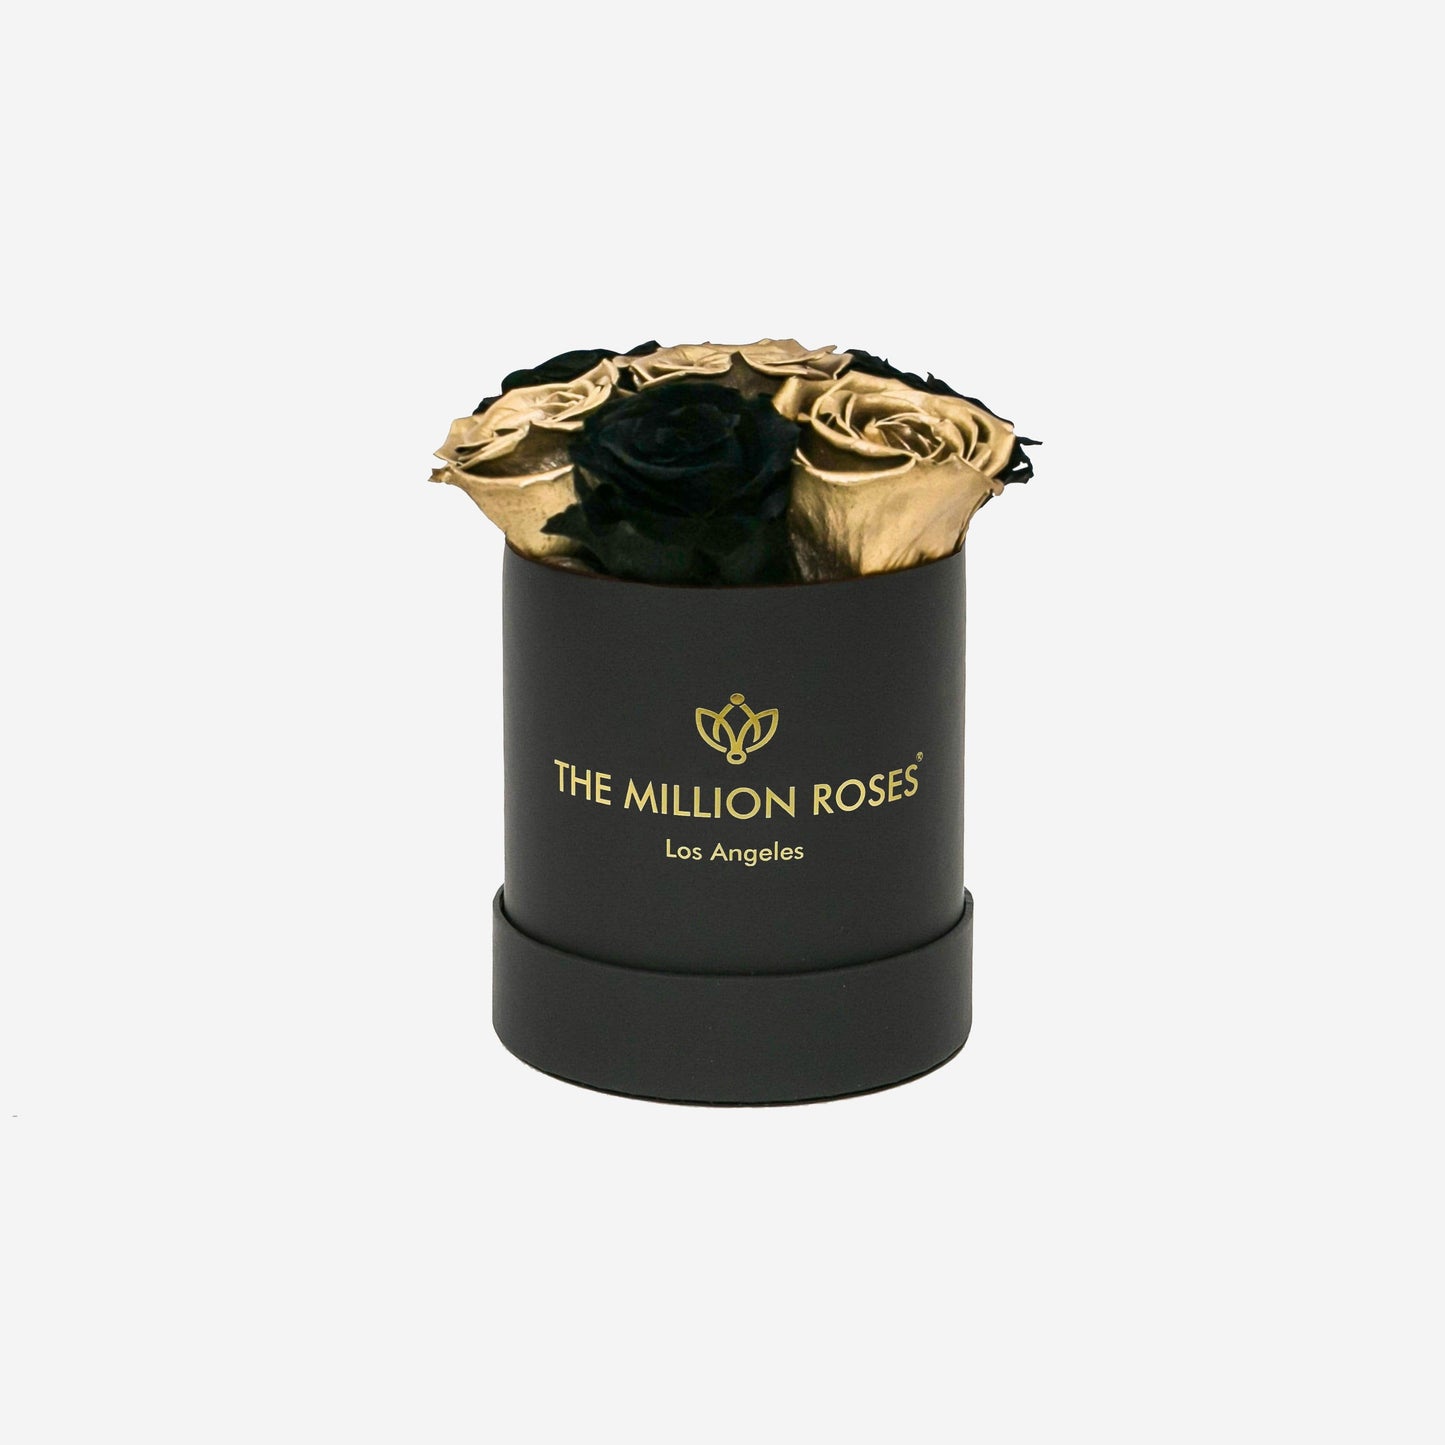 Marvelous Miniature Flower Arranging – Black Gold